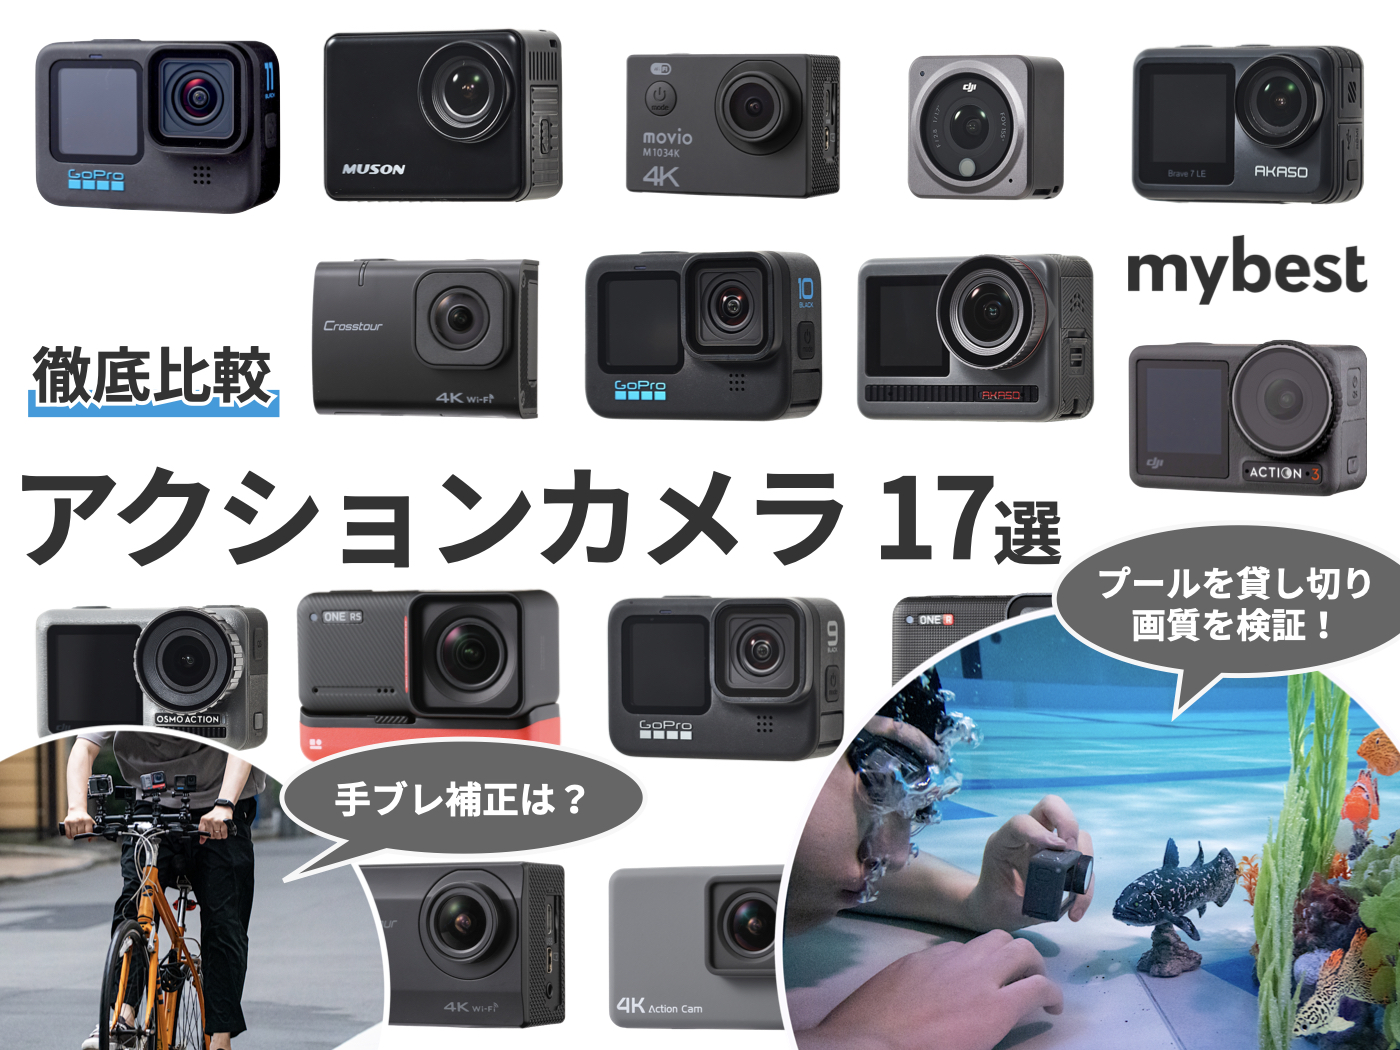 MUSON 4K動画対応 30M防水 1200万画素 ウェアラブルカメラ